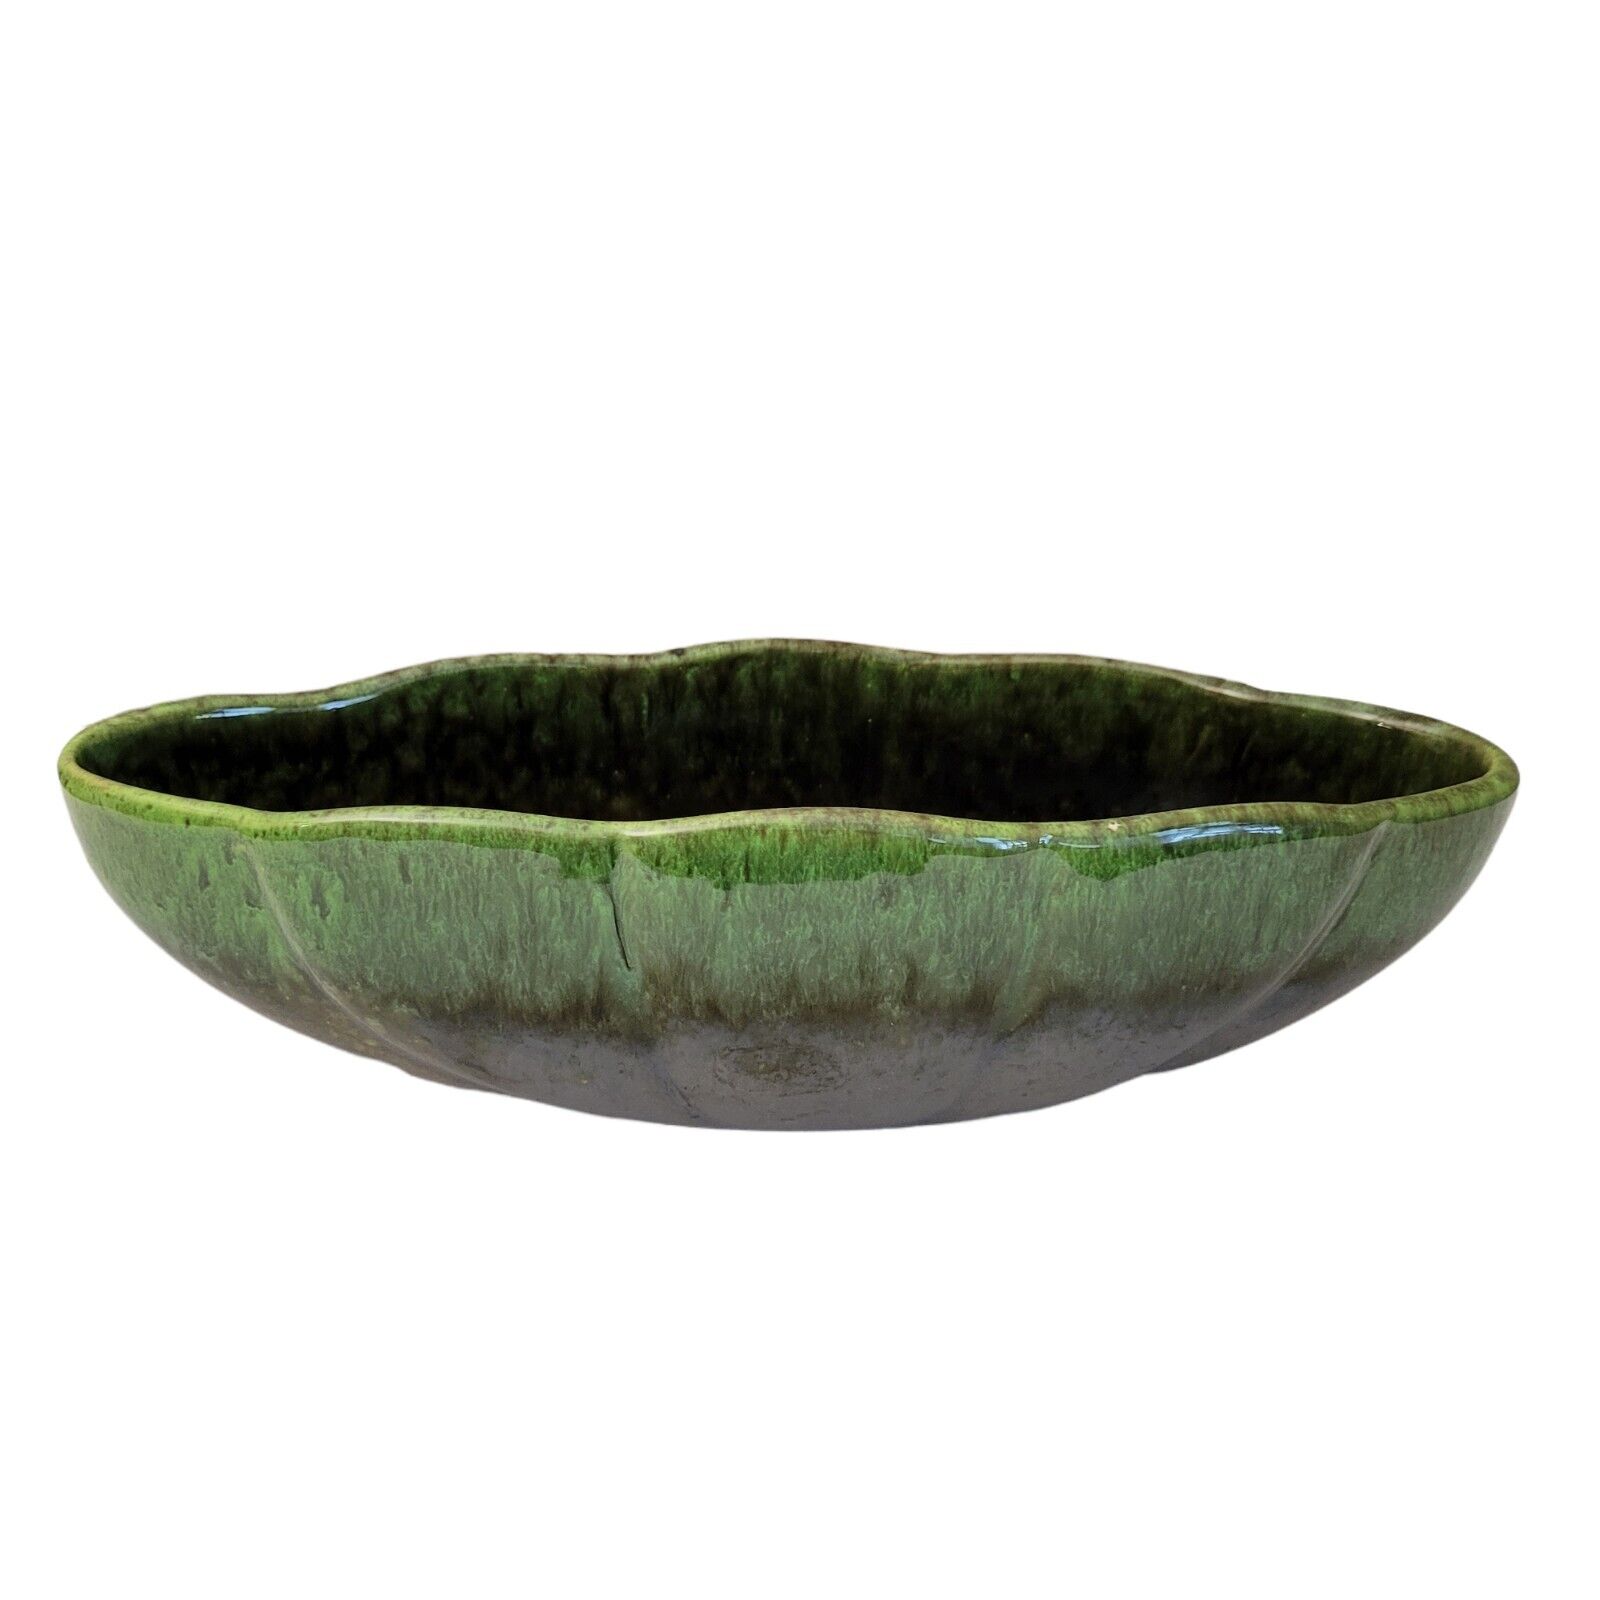 Rare Royal Haeger Pottery Serving Bowl Planter Glazed Avocado Green 3905 MCM